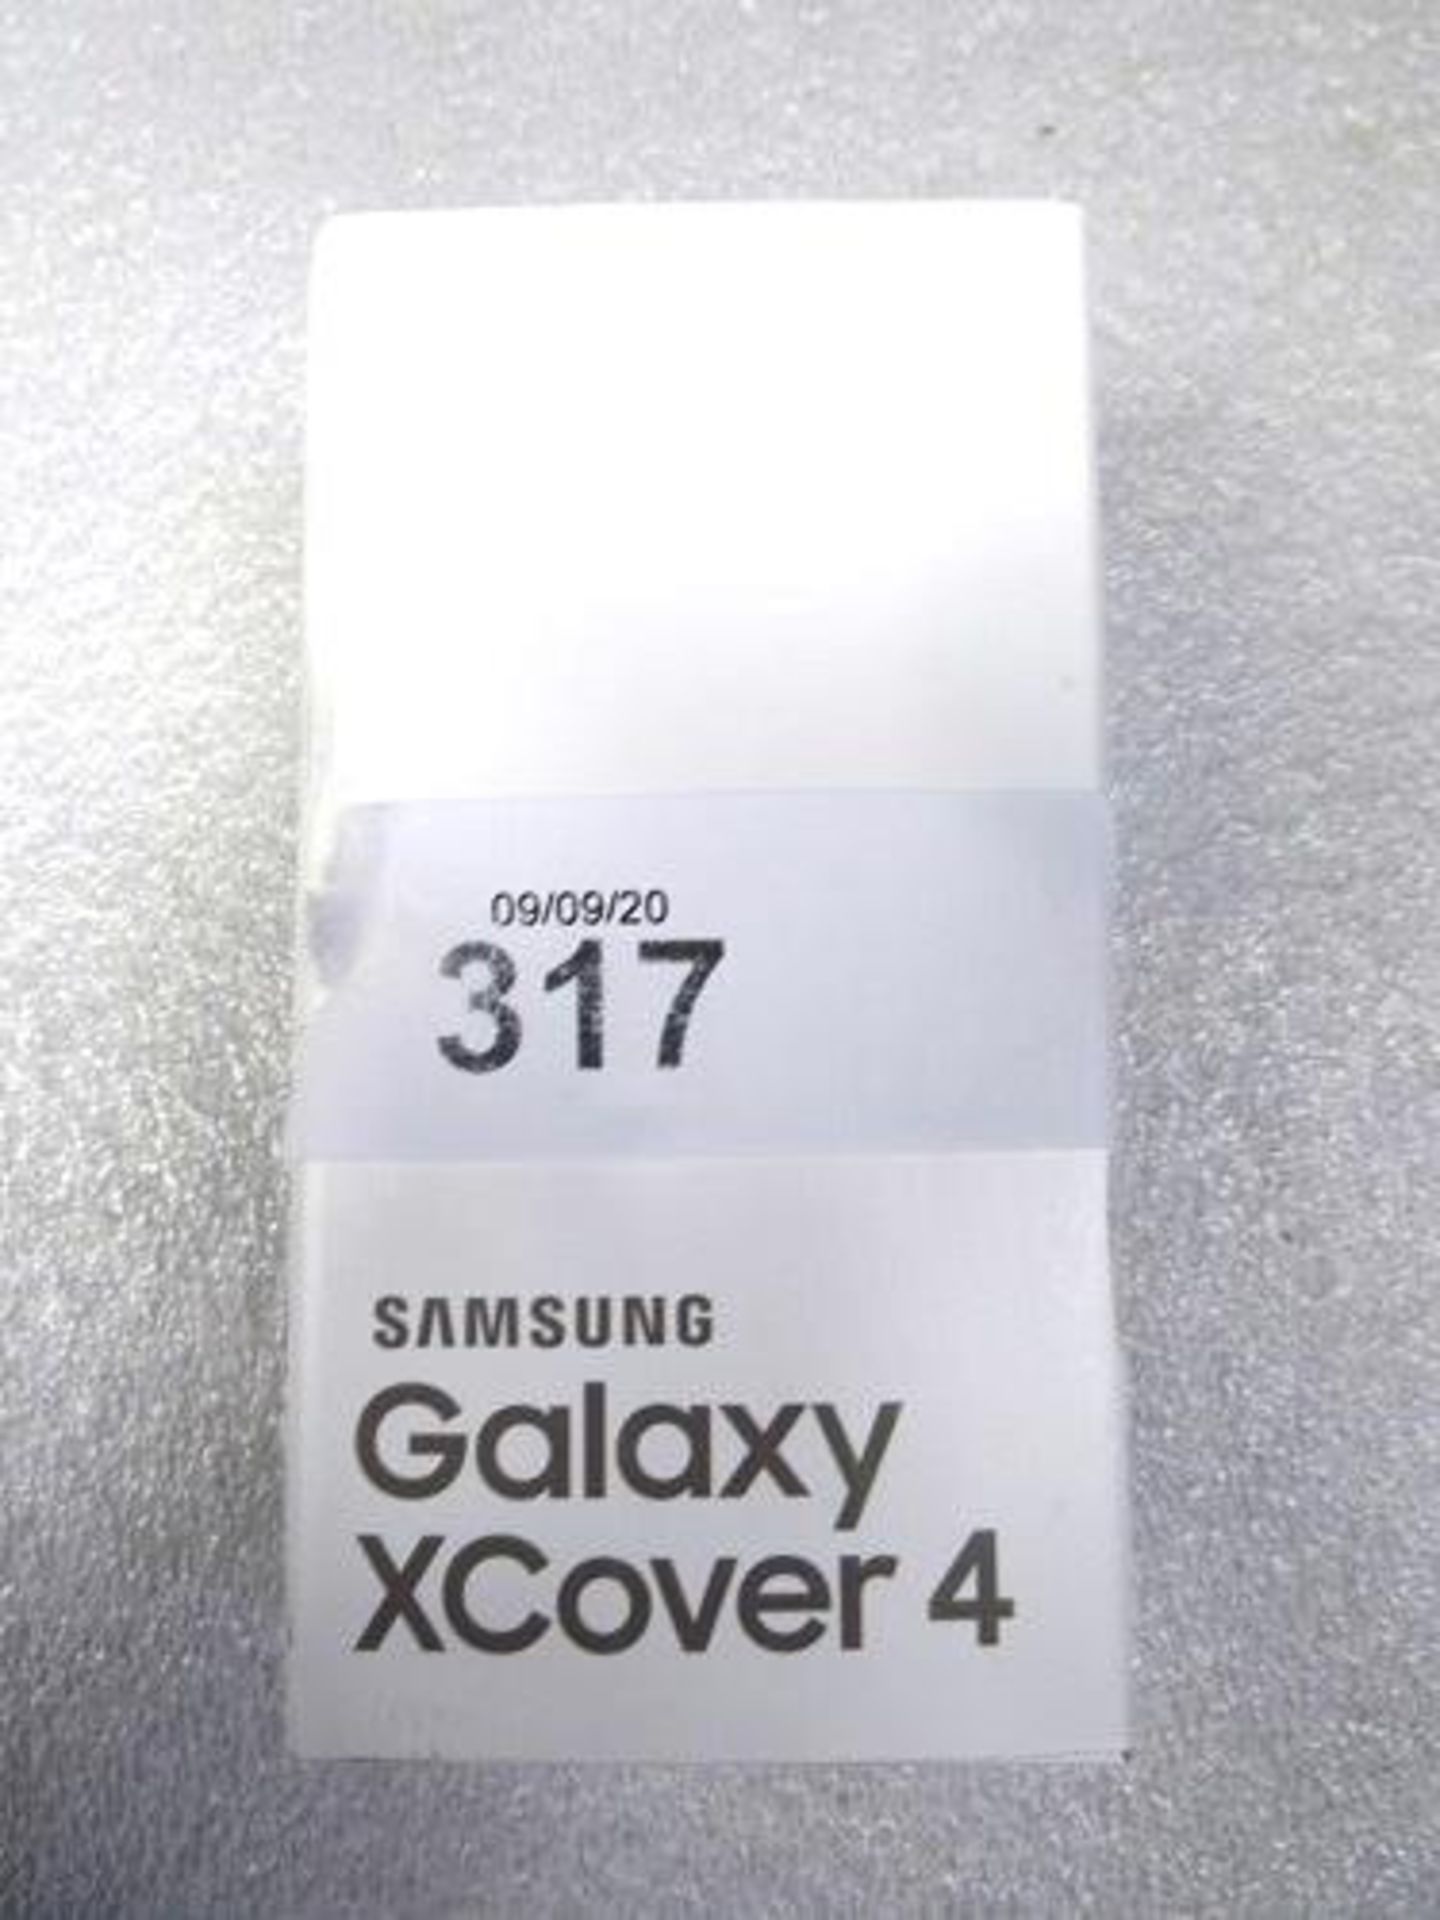 A black Samsung 16gb Galaxy XCover 4 smart phone, model SM-G390F, IMEI: 355215/10 559688/1 -